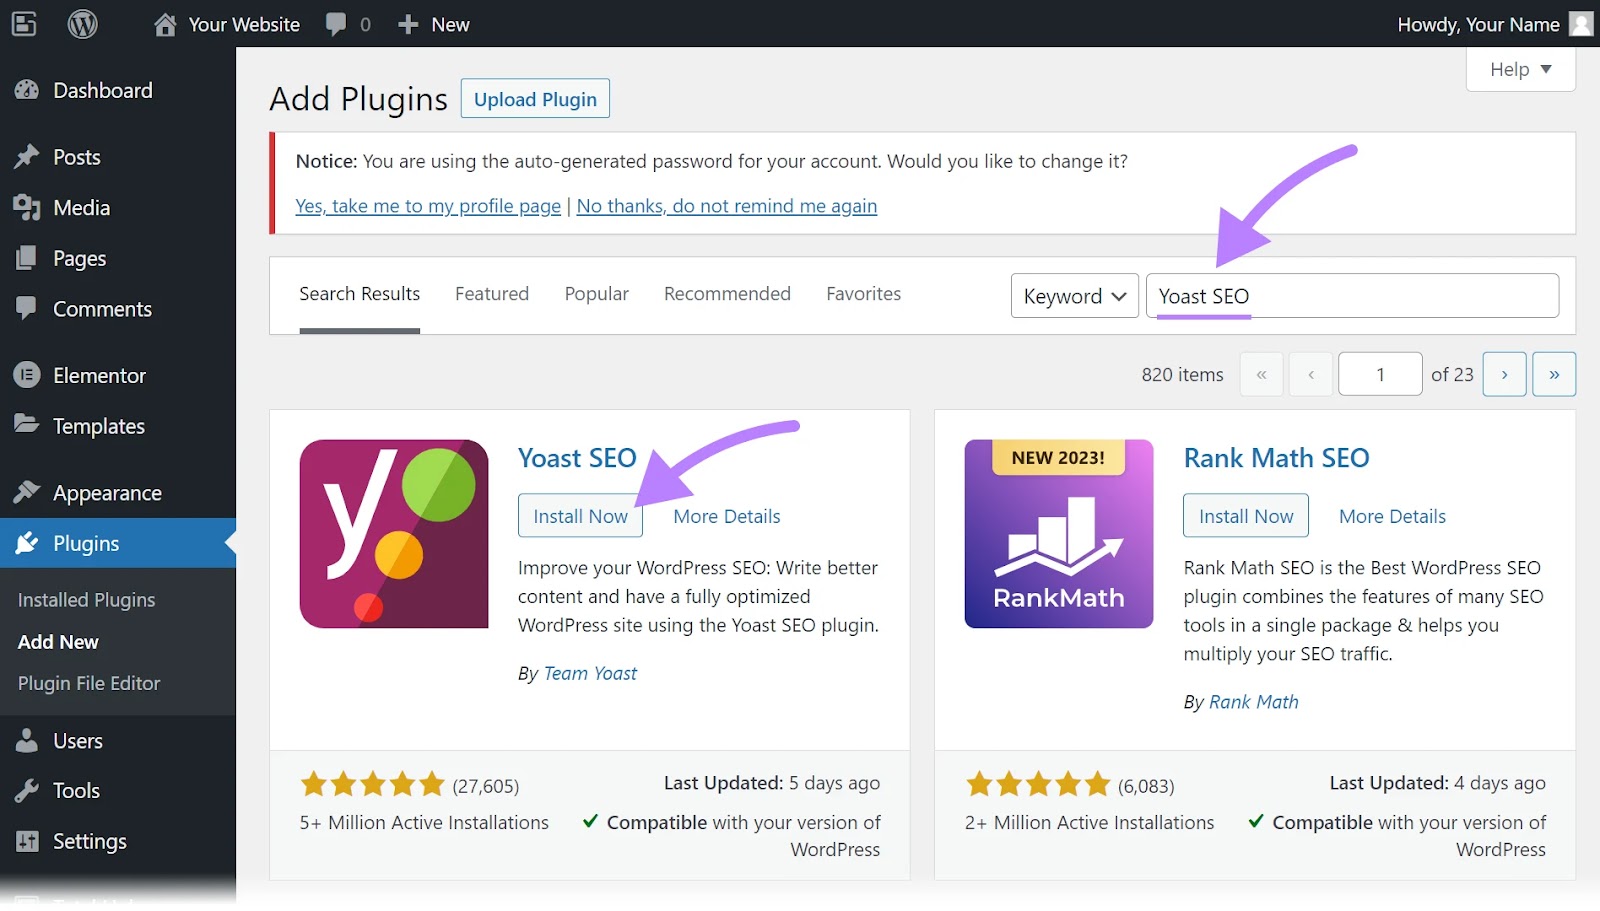 "Yoast SEO" widget selected under "Add Plugins" screen in WordPress